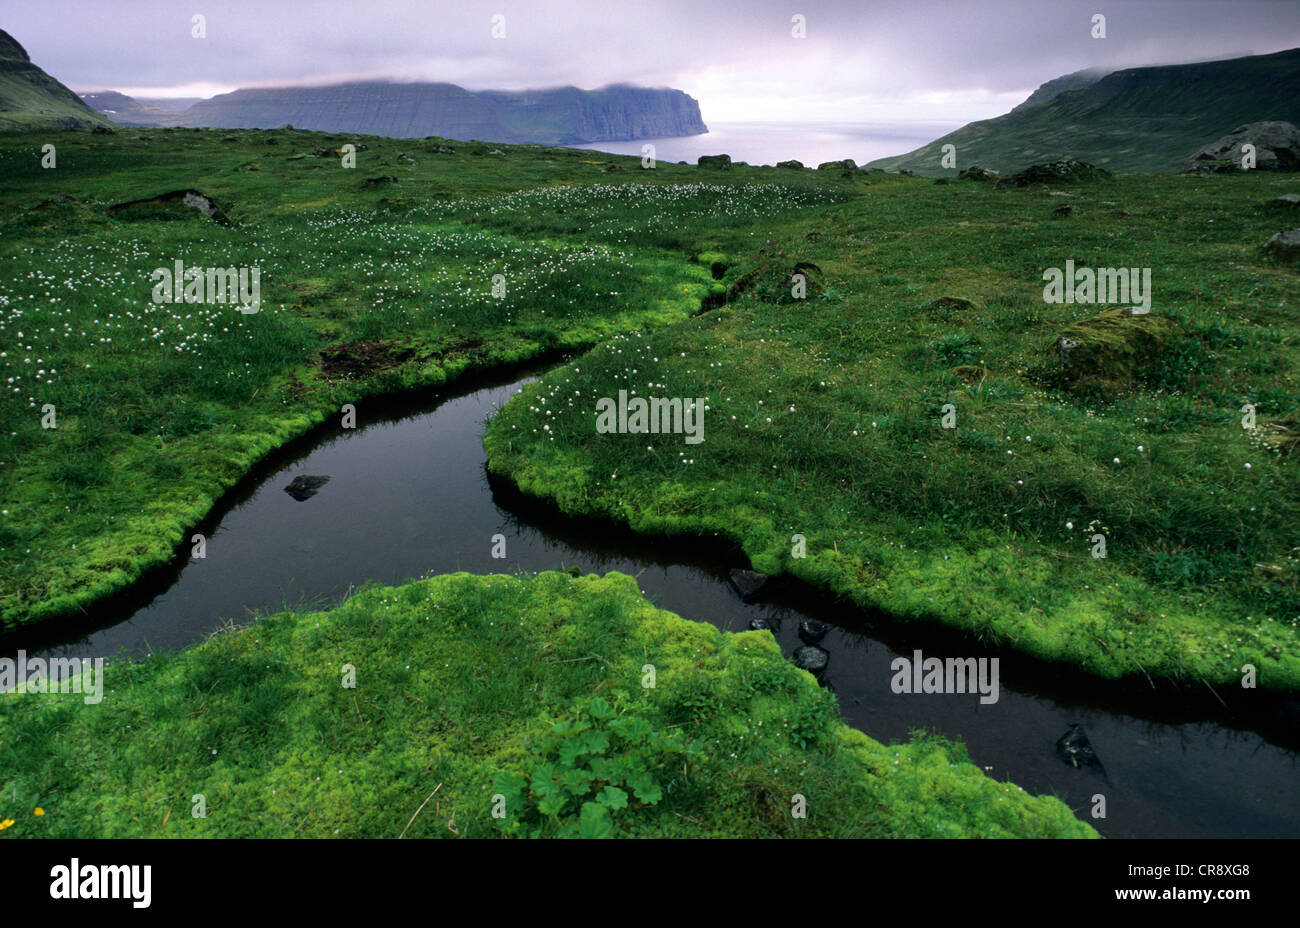 Wetland area near Horn on Hornstrandir peninsula, a hikers' paradise, Hornvik, Hornstrandir region, Westfjords, Iceland, Europe Stock Photo